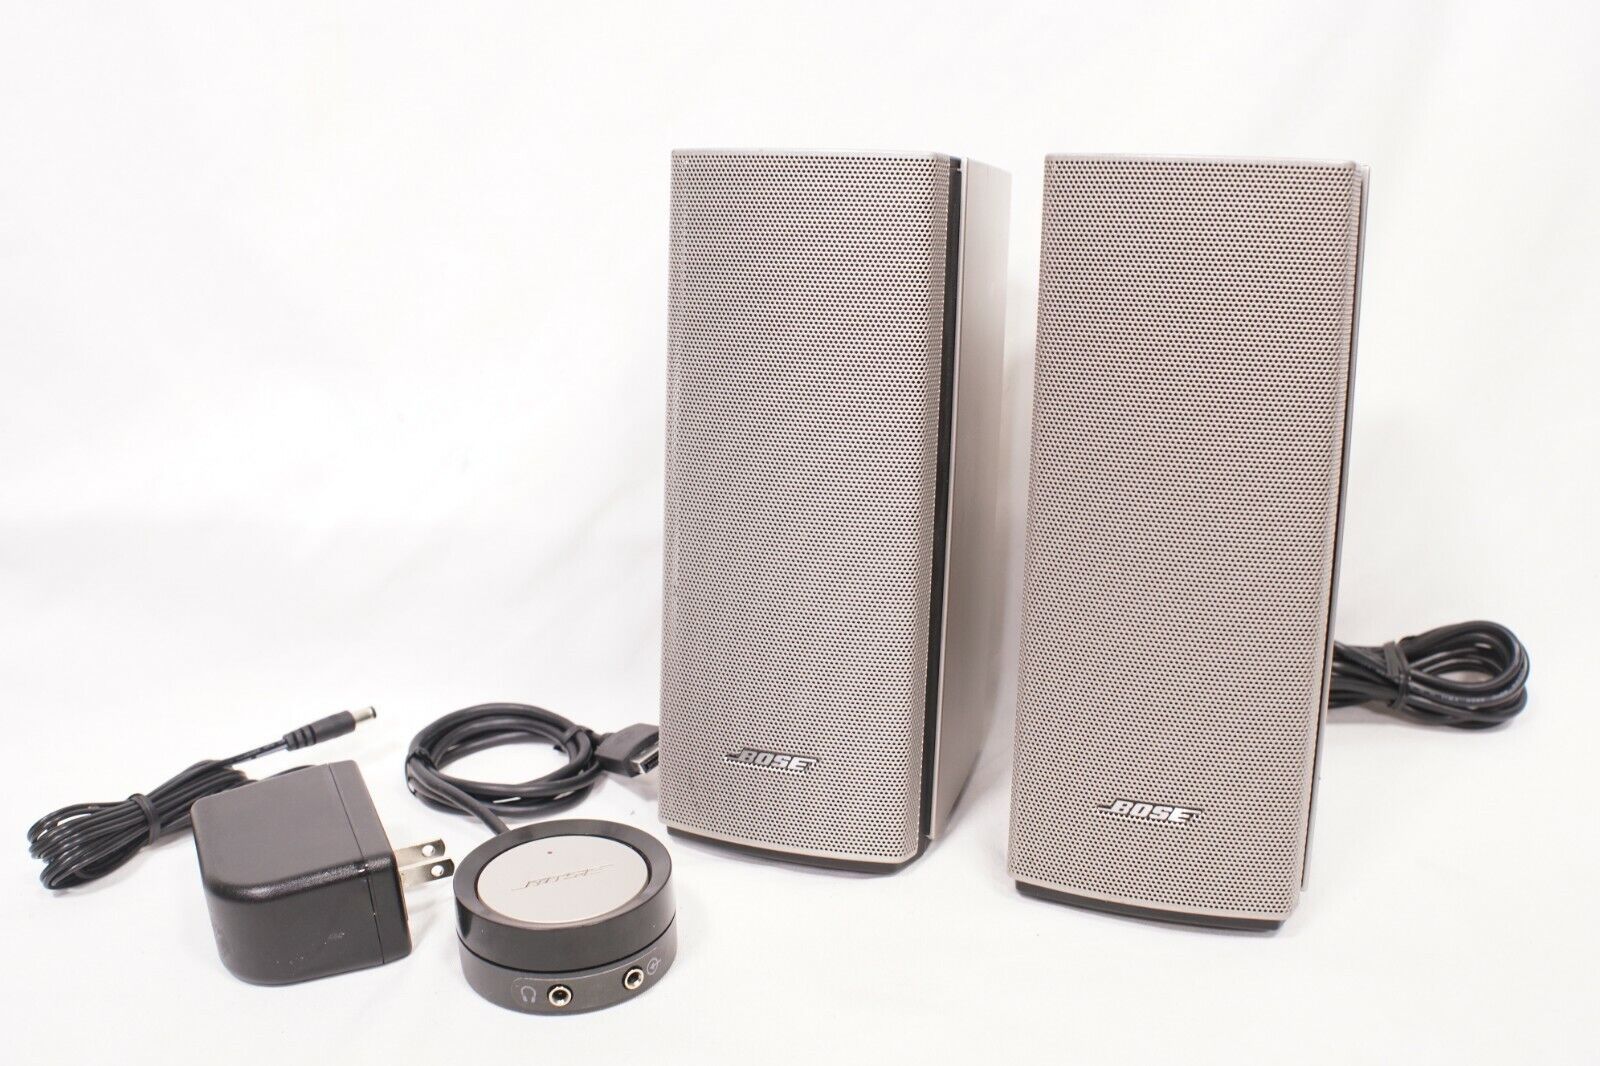 Excellent Condition Bose Companion 20 Multimedia Speaker System - Silver  PC/MAC